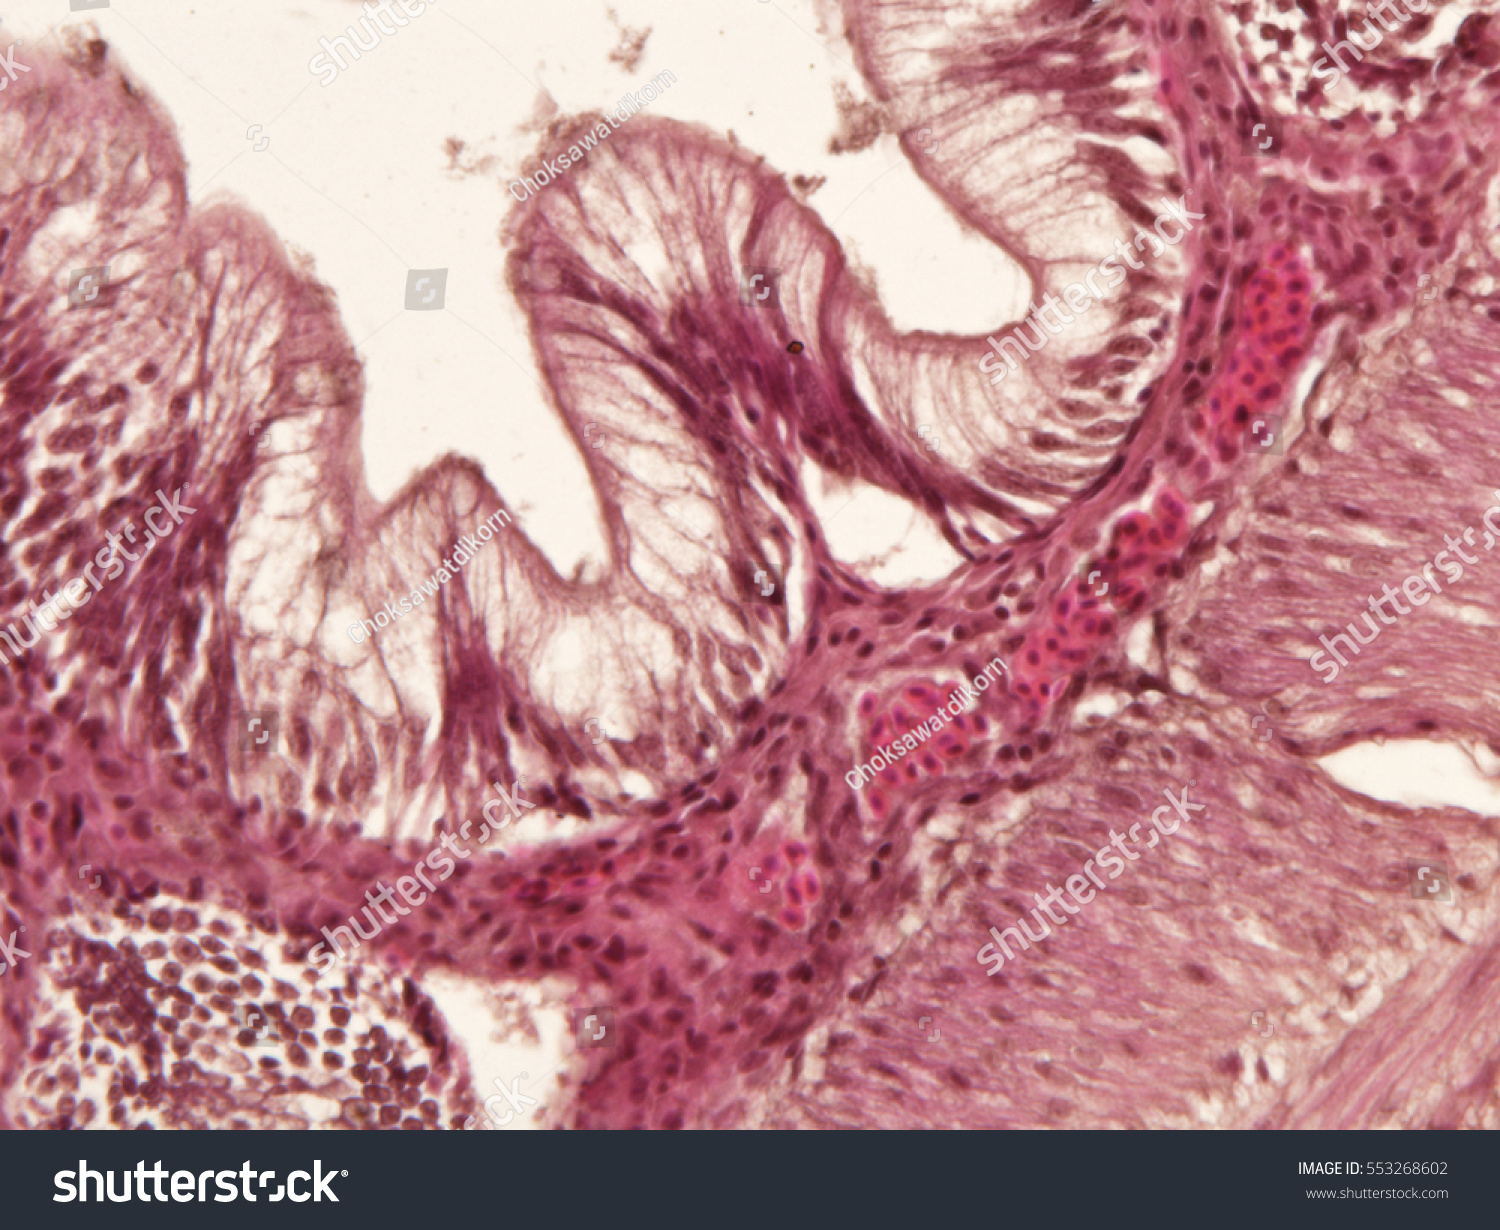 Intestine Animal Tissue Under Microscope View Stock Photo